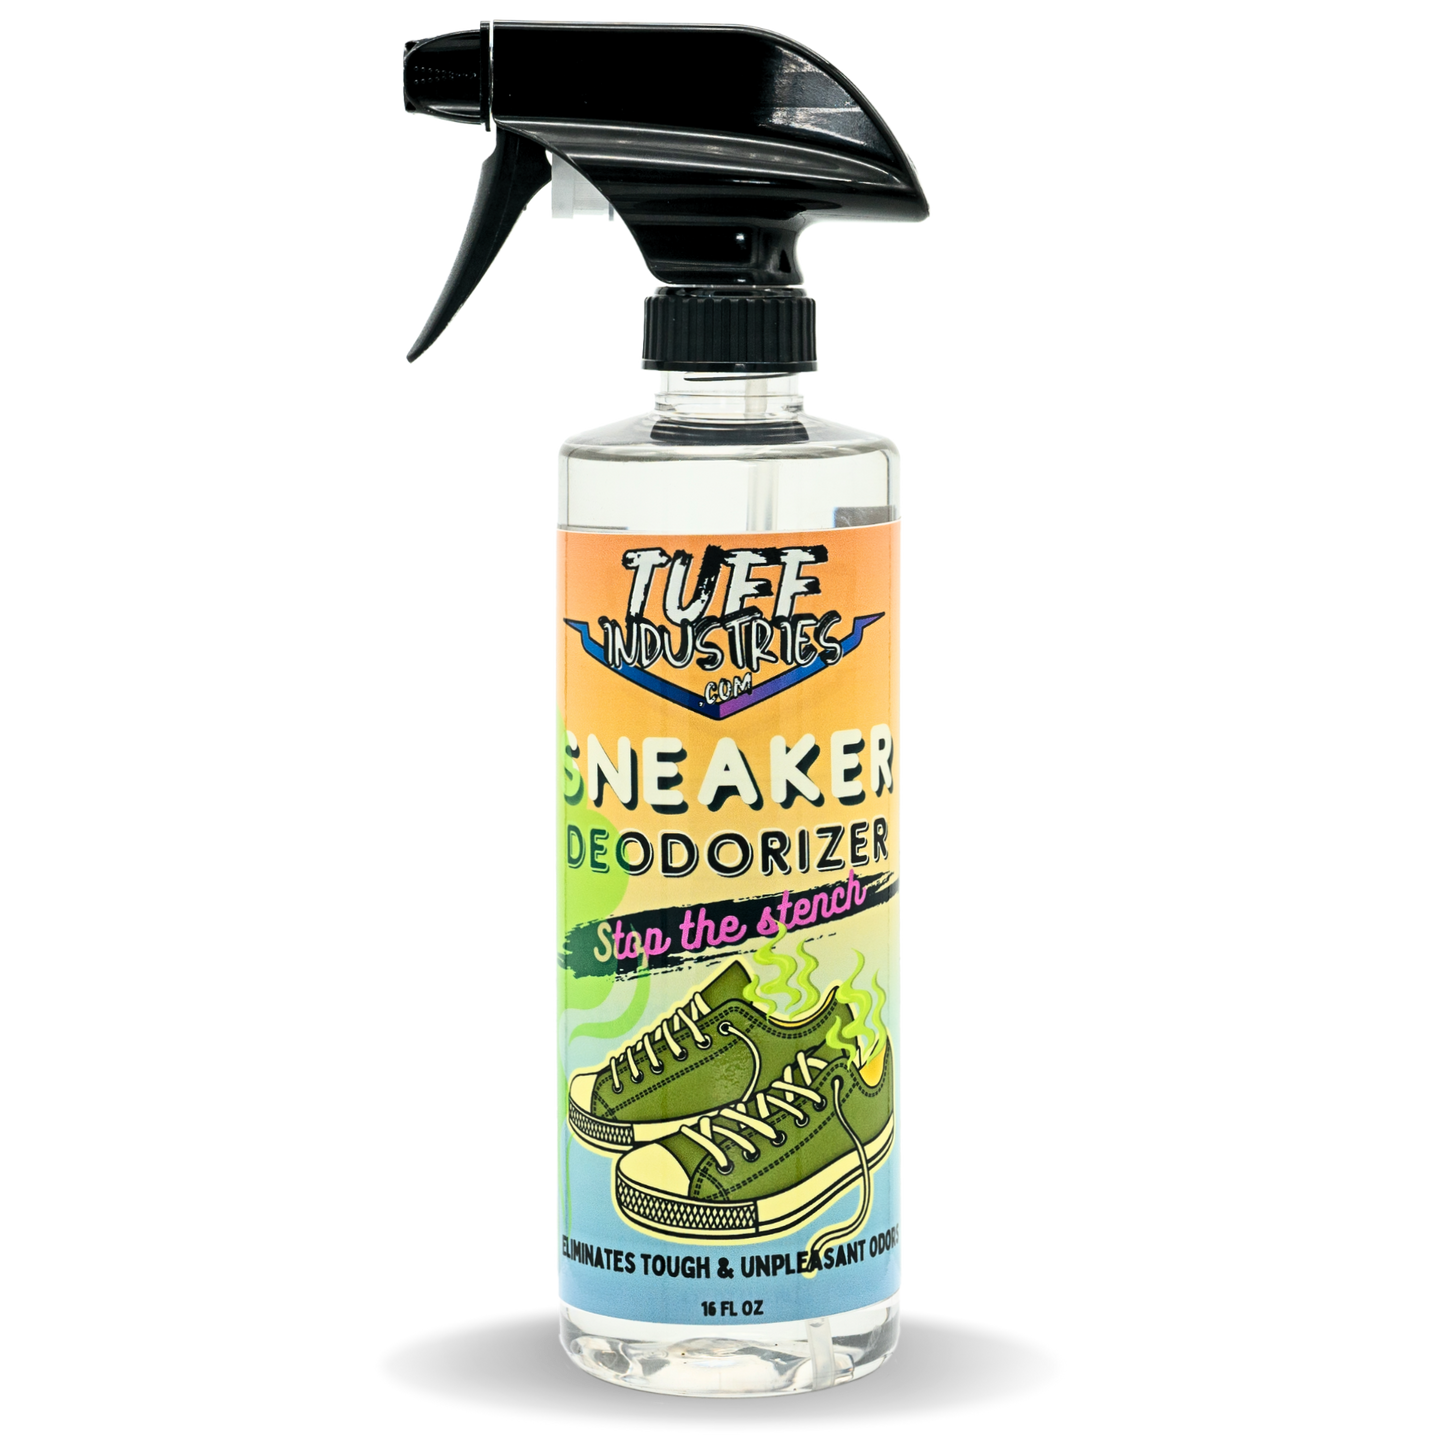 Sneaker Deodorizer - Powerful Odor Eliminator